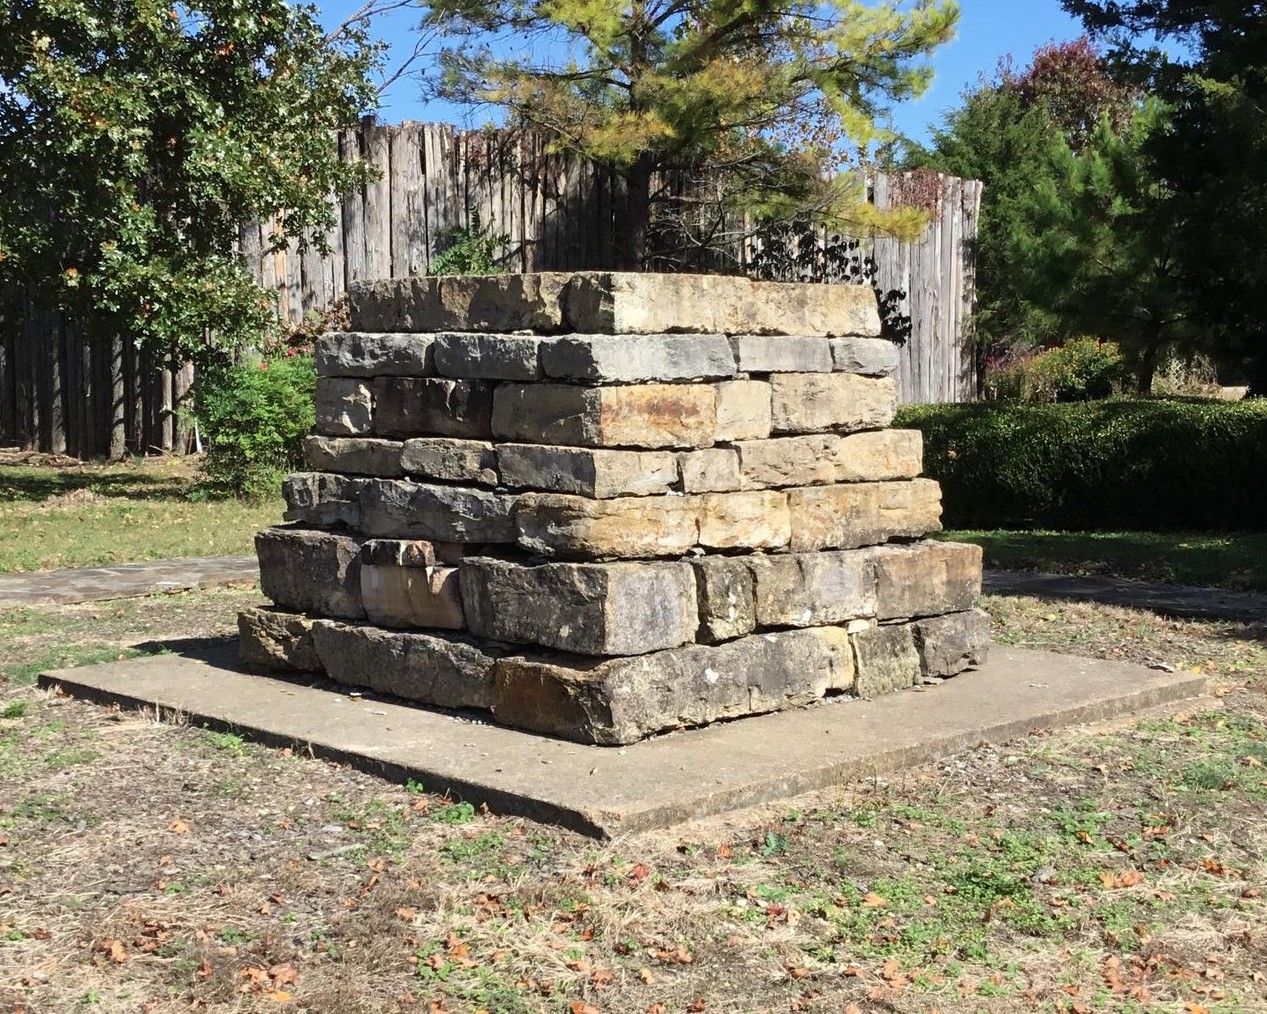 Original Meriwether Lewis Monument base stones